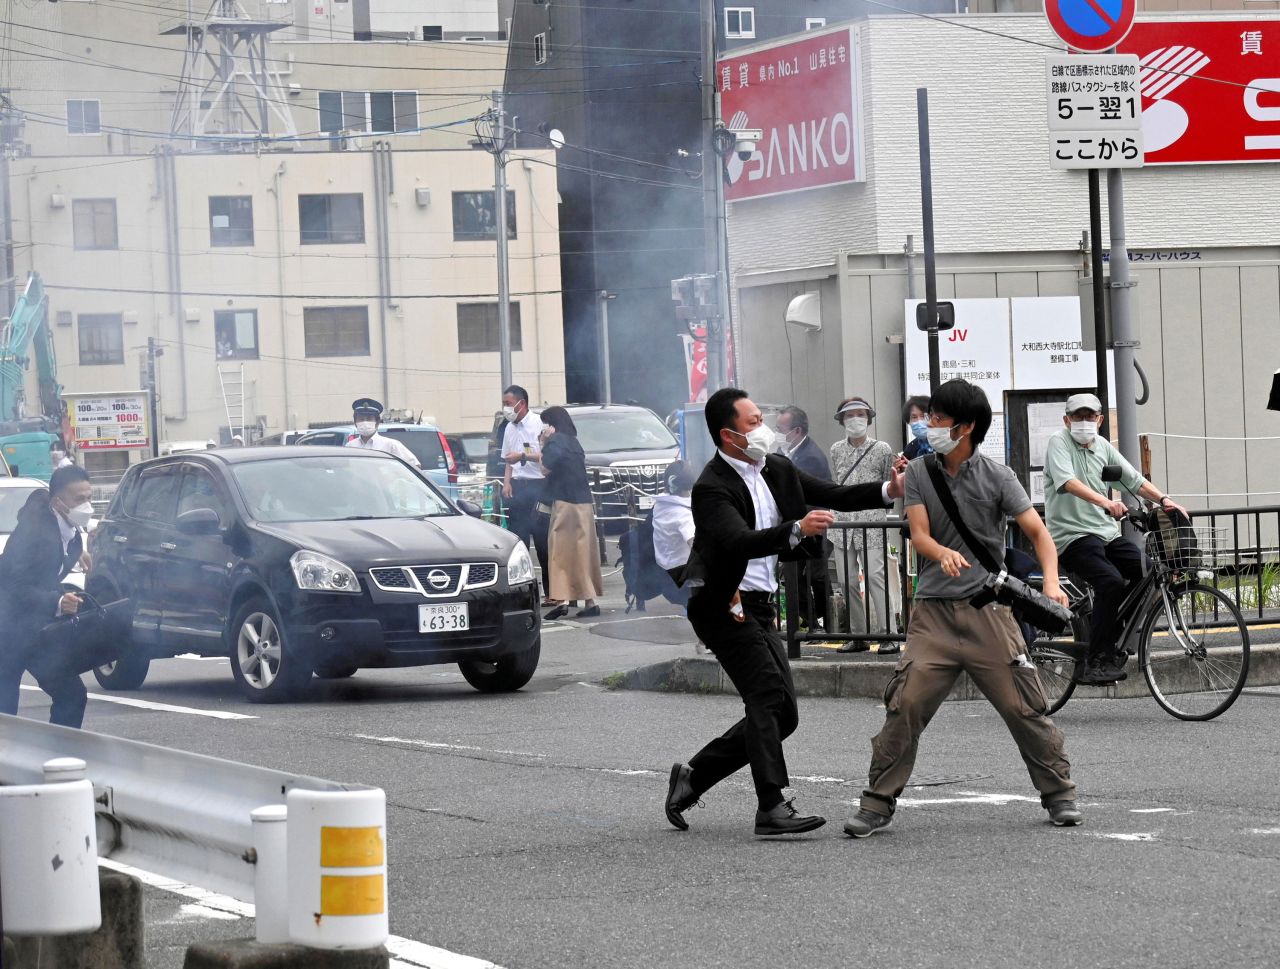 Former Japanese Prime Minister Shinzo Abe Assassinated In Nara Shooting